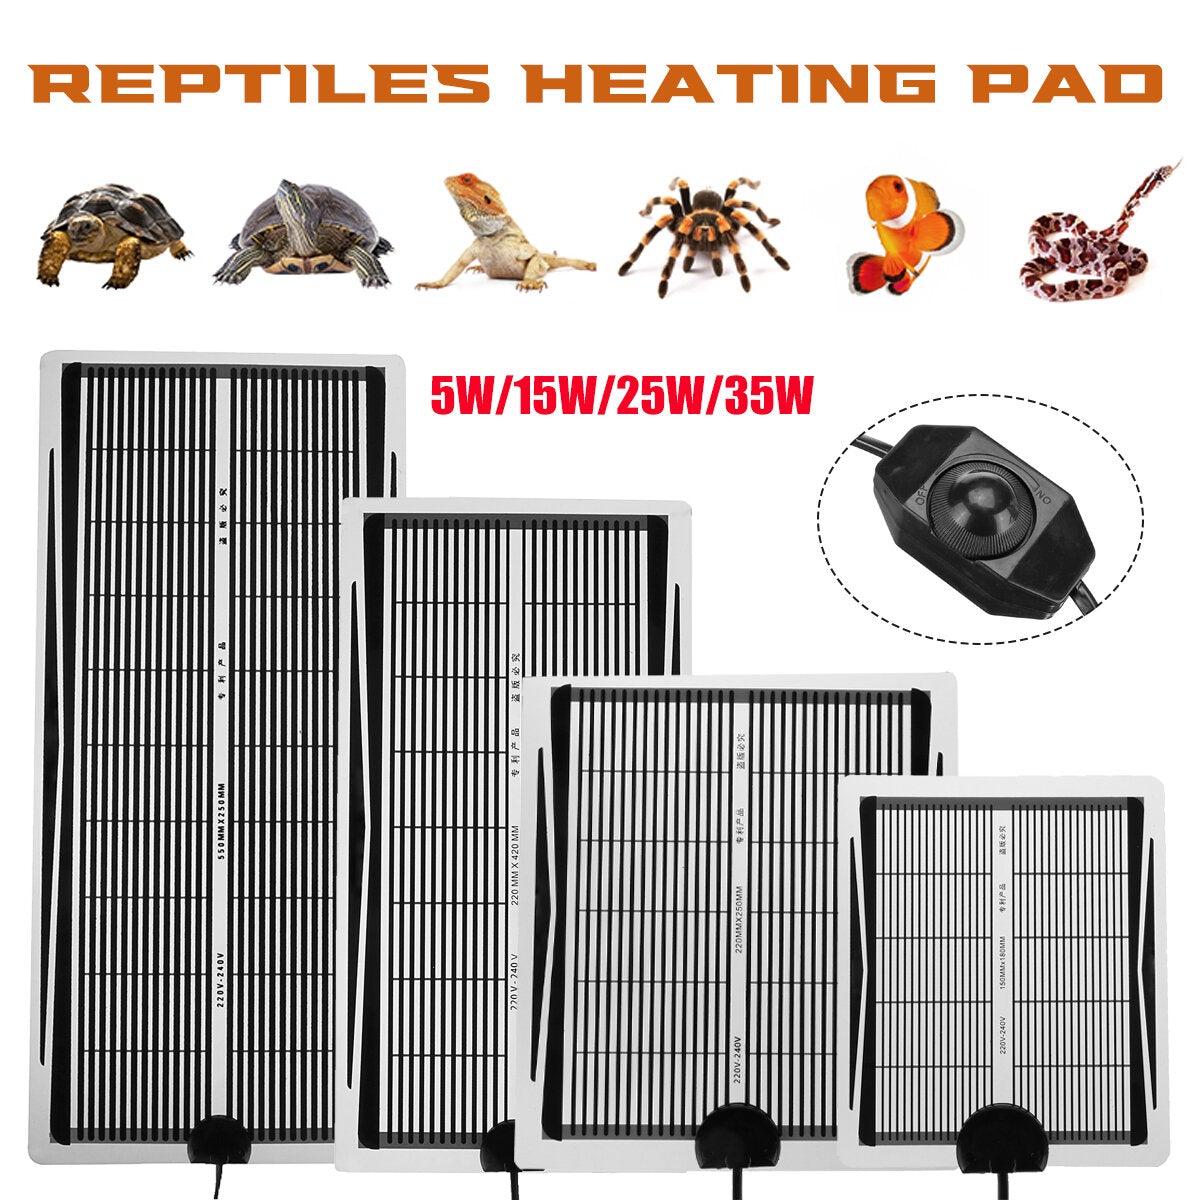 Heating Pad Adjustable Temperature Control Pet Reptiles Heating Mats for Amphibian and Small Pet